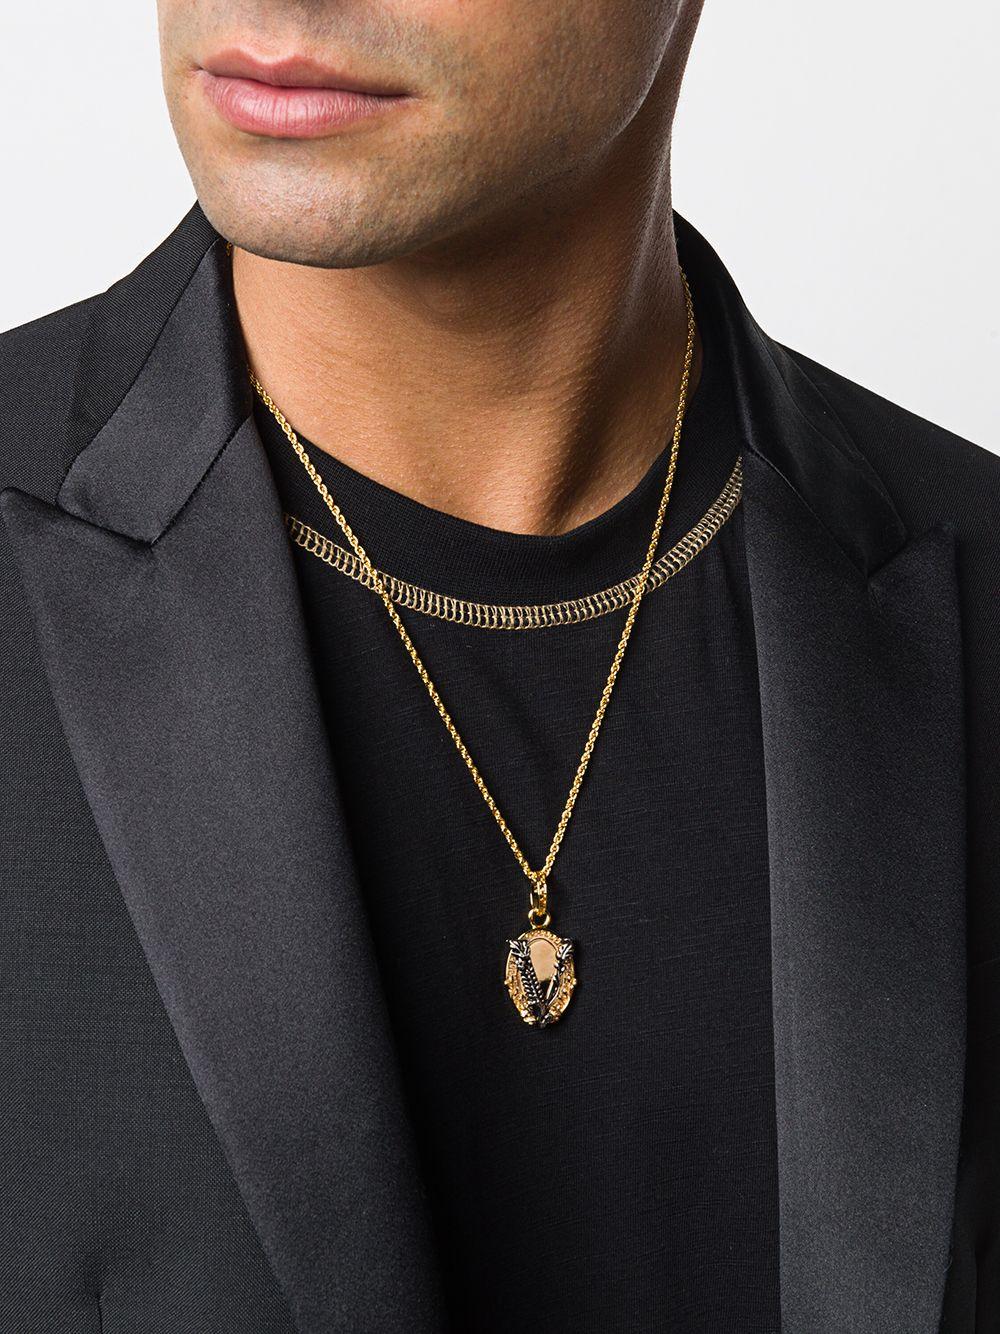 Versace Virtus Pendant Logo Necklace in Gold (Metallic) for Men - Lyst